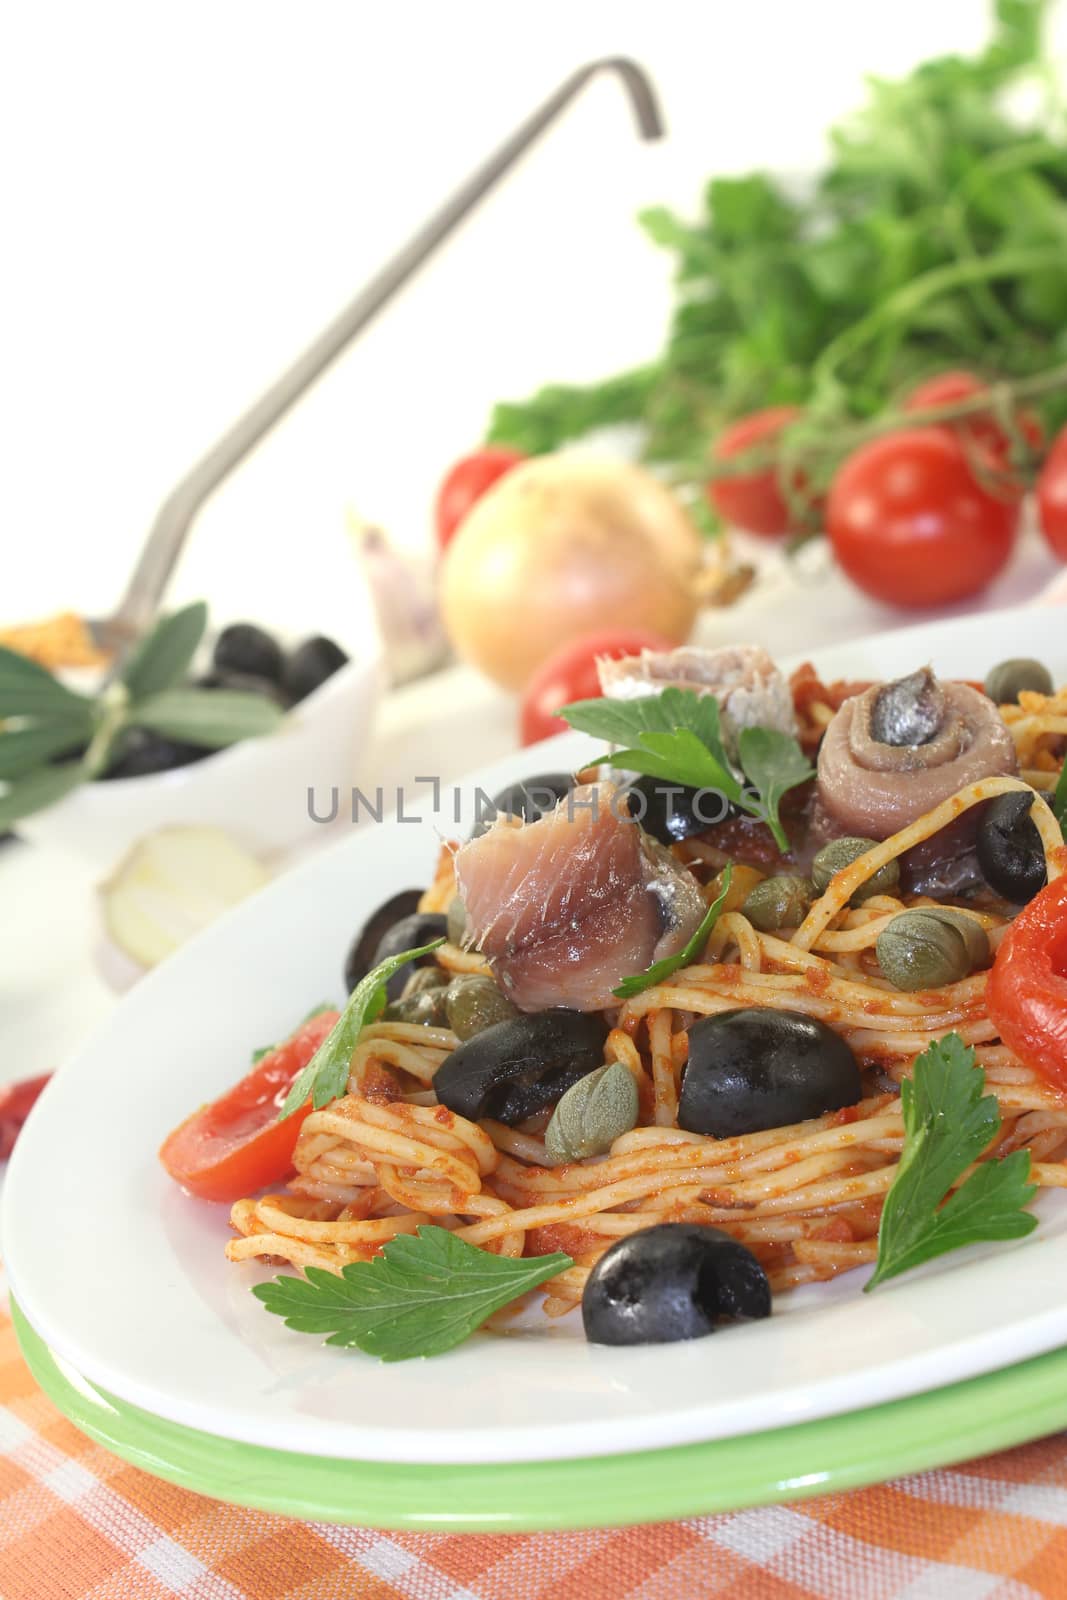 Spaghetti alla puttanesca with olives and anchovies